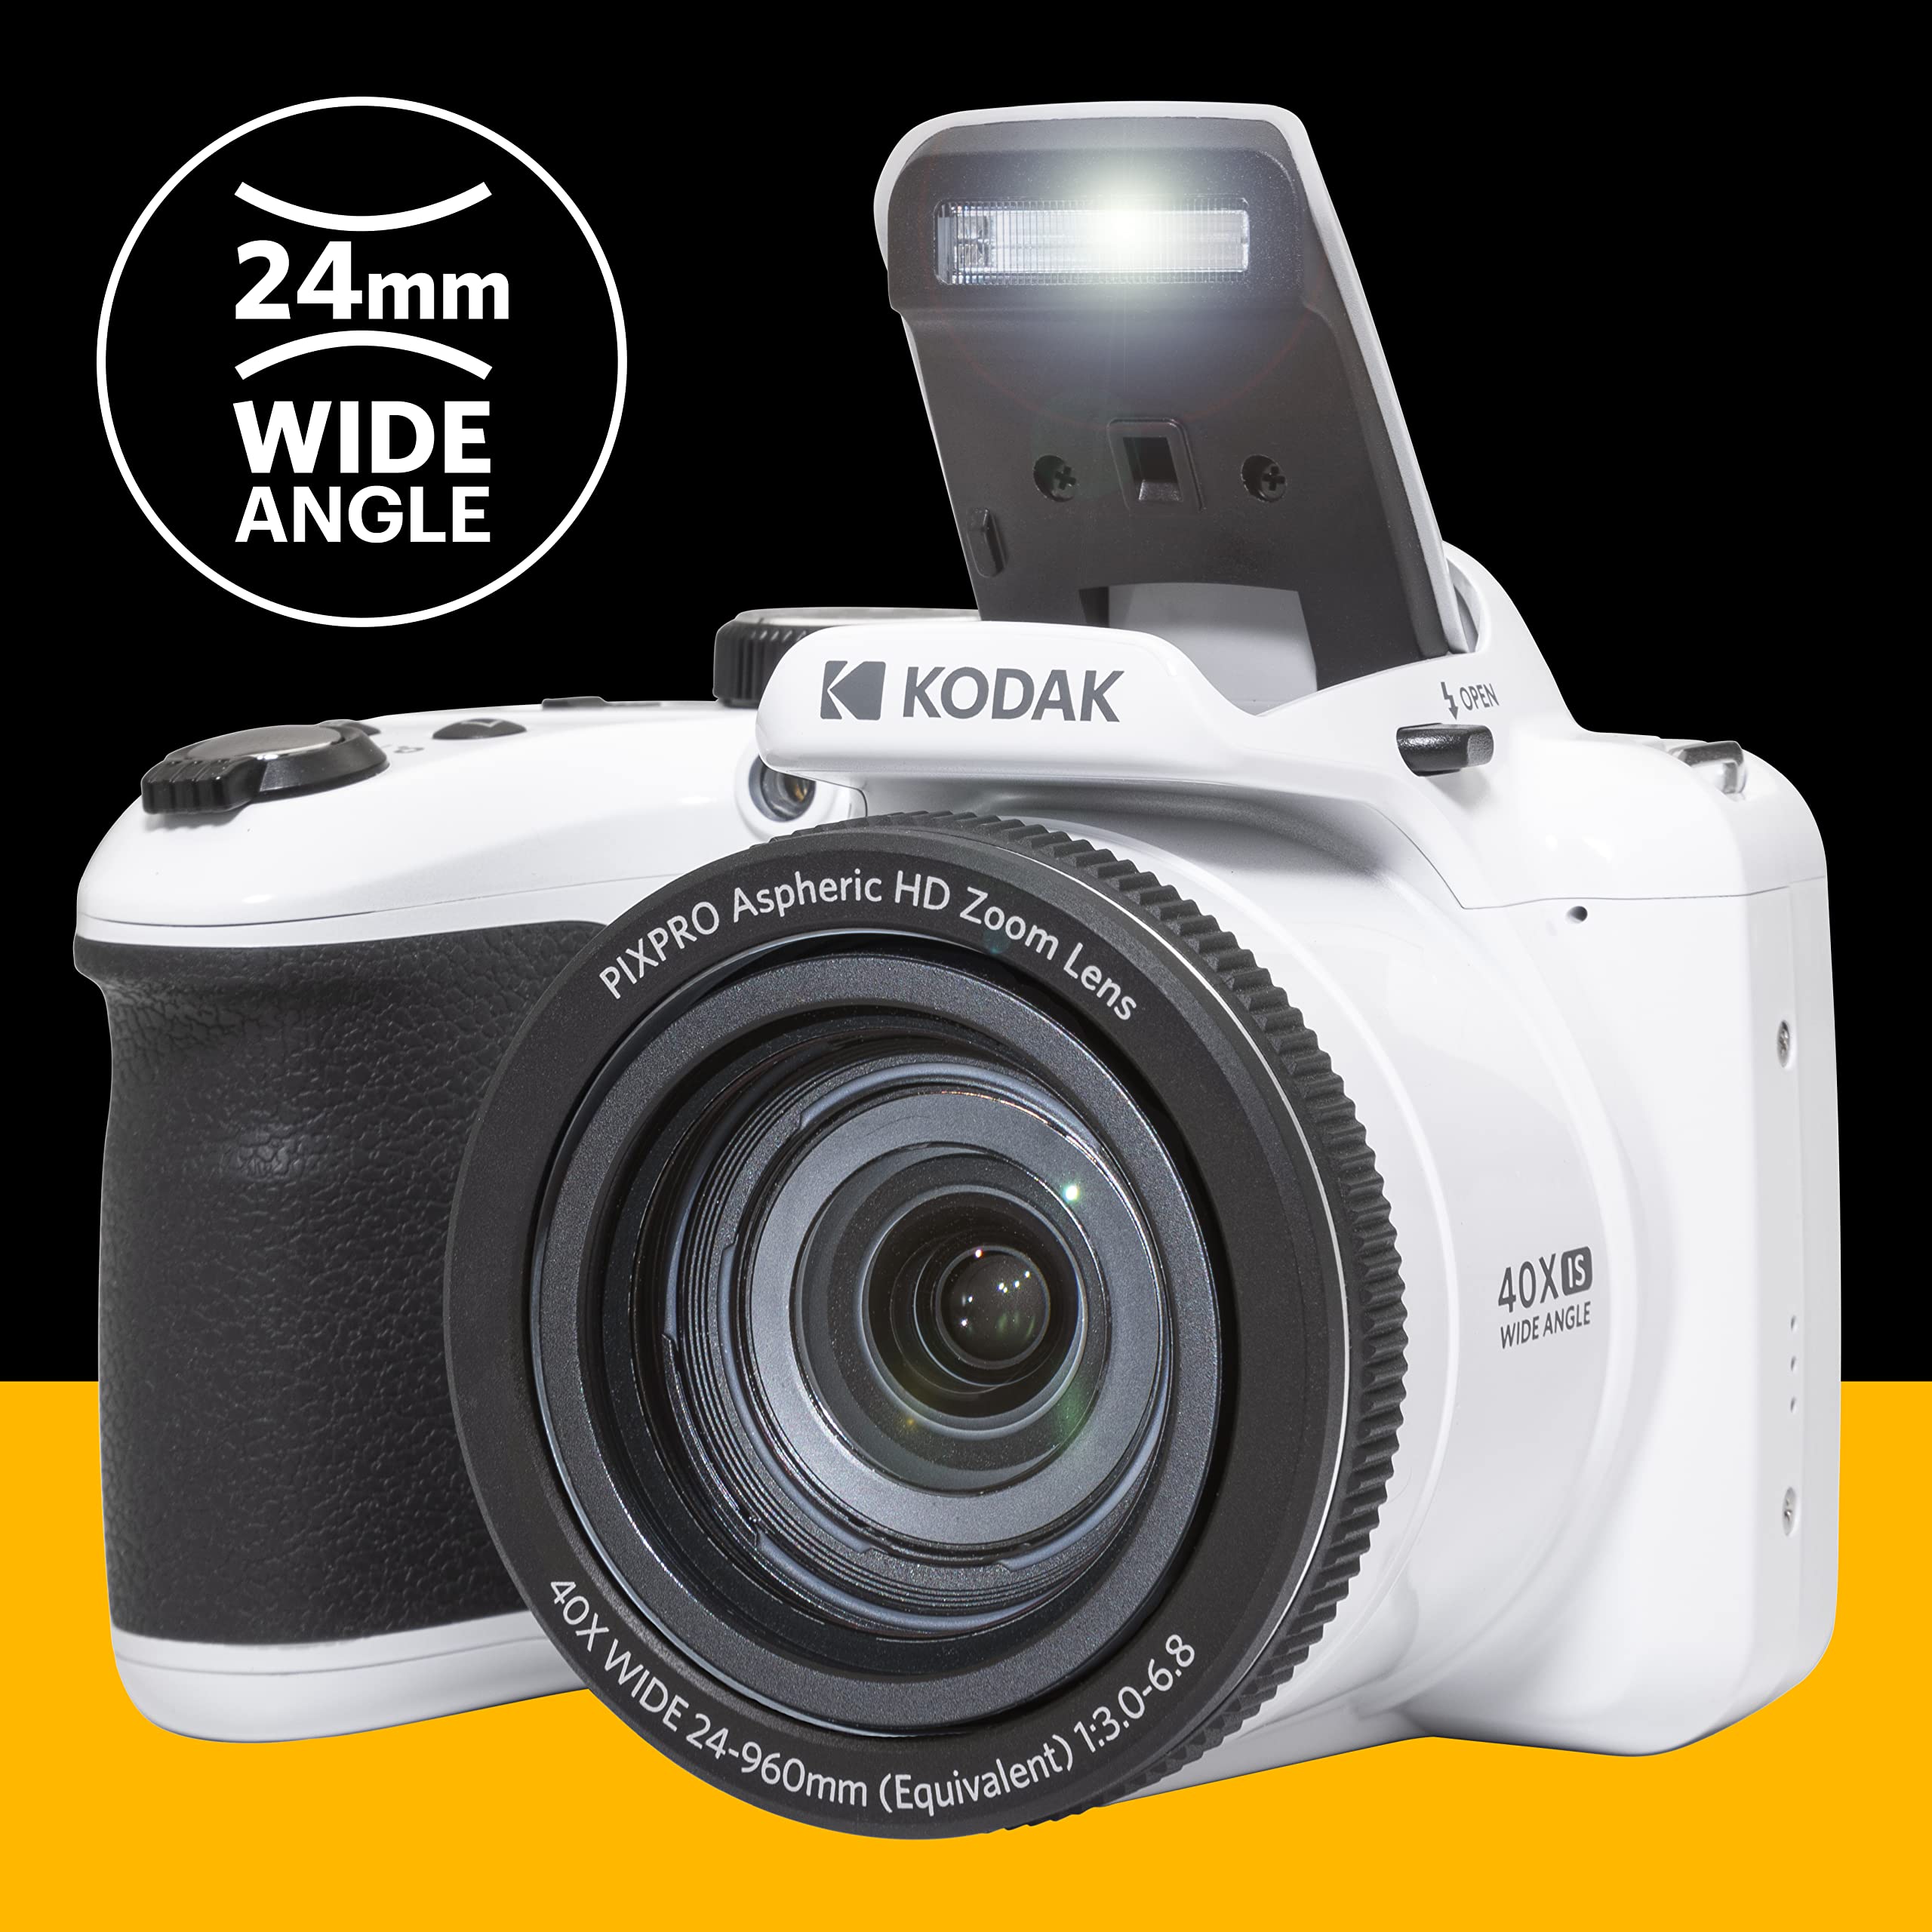 KODAK PIXPRO AZ405-WH 20MP Digital Camera 40X Optical Zoom 24mm Wide Angle Lens Optical Image Stabilization 1080P Full HD Video 3